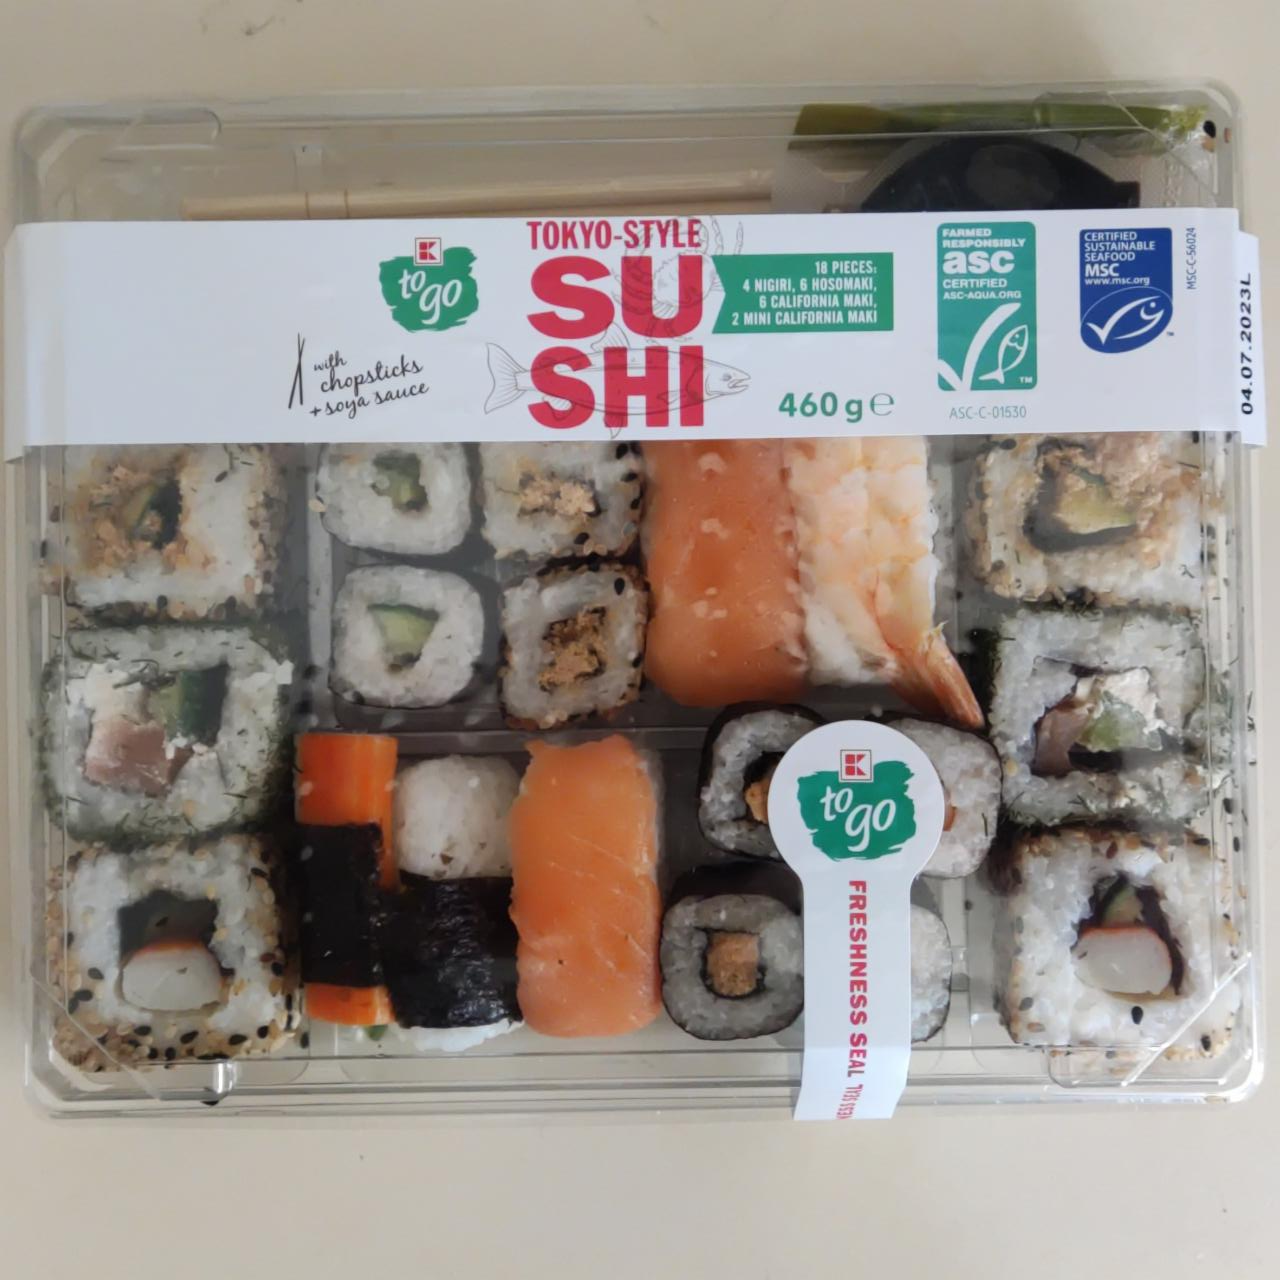 Fotografie - Sushi Tokyo style K-to go